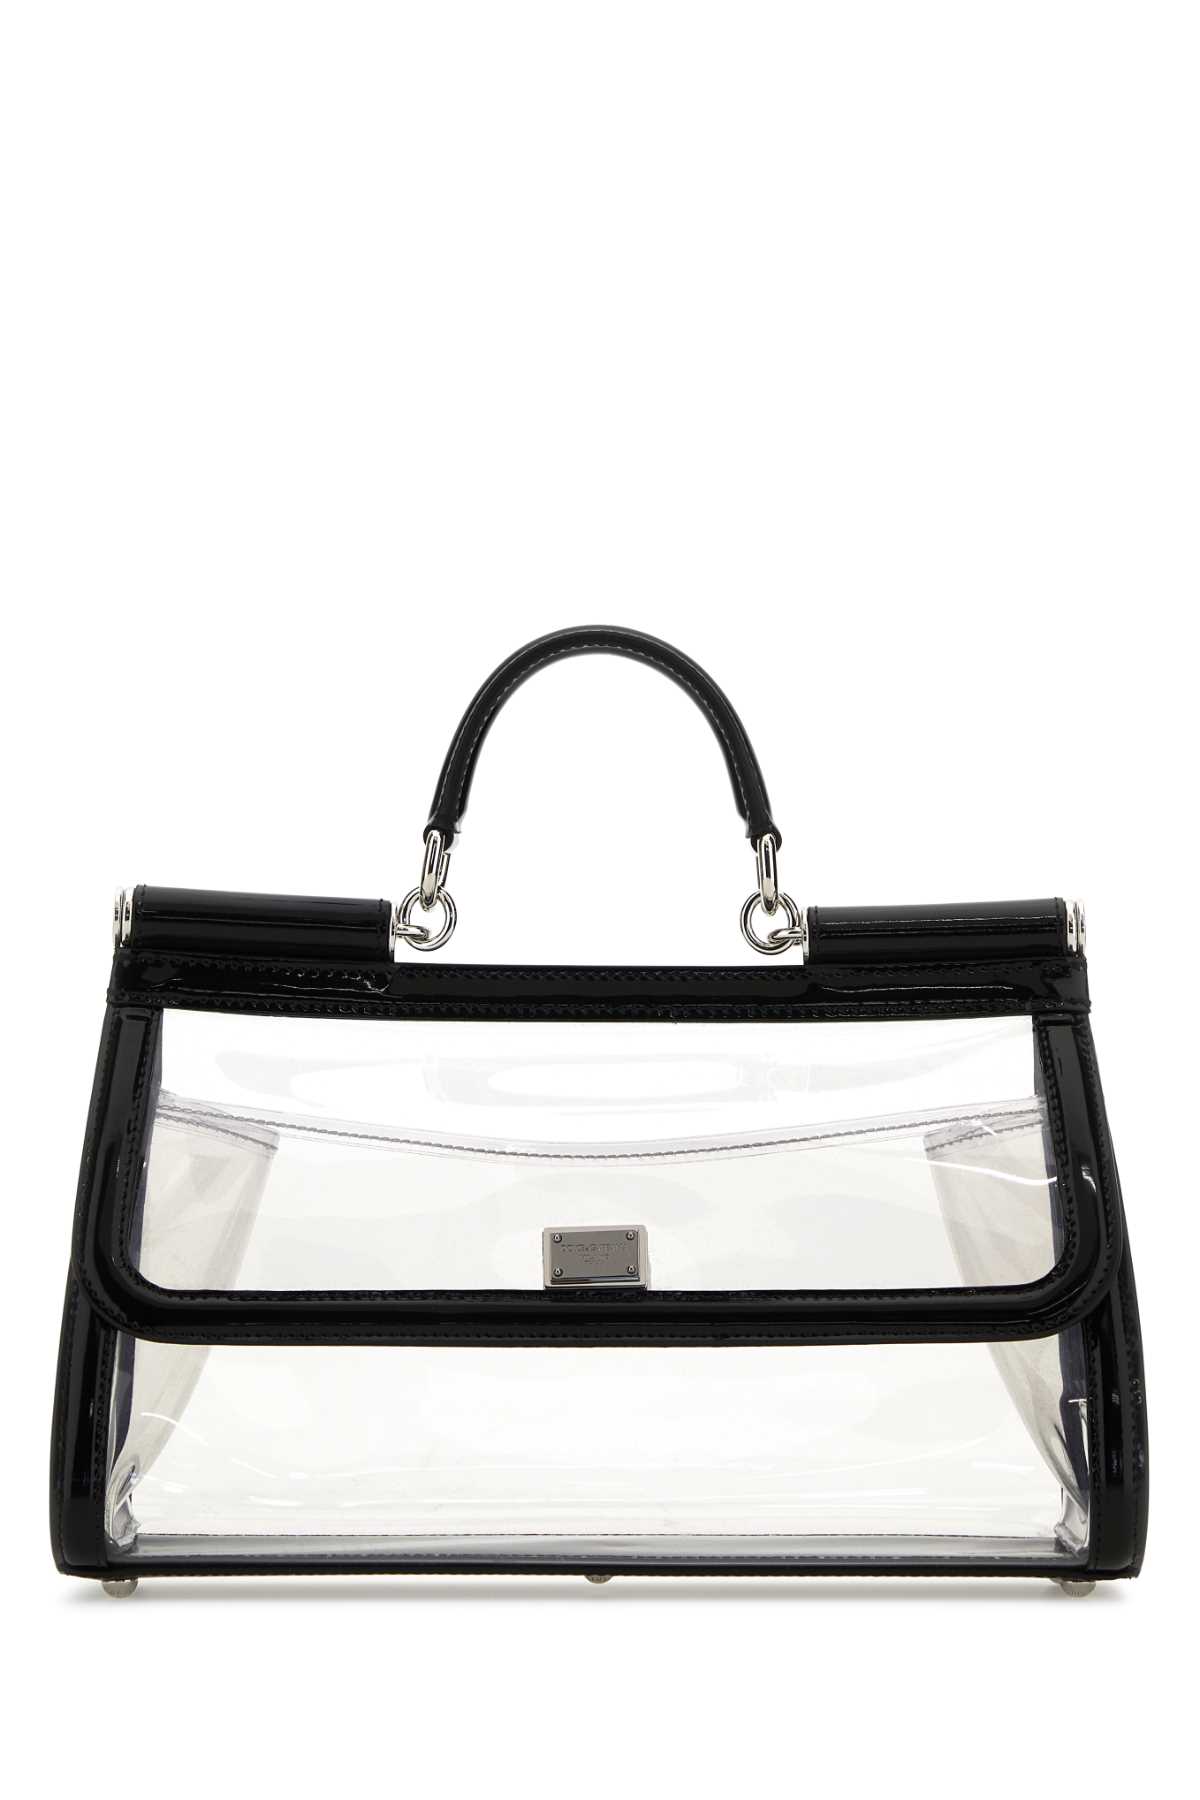 Dolce & Gabbana Two-tone Pvc And Leather Medium Sicily Handbag